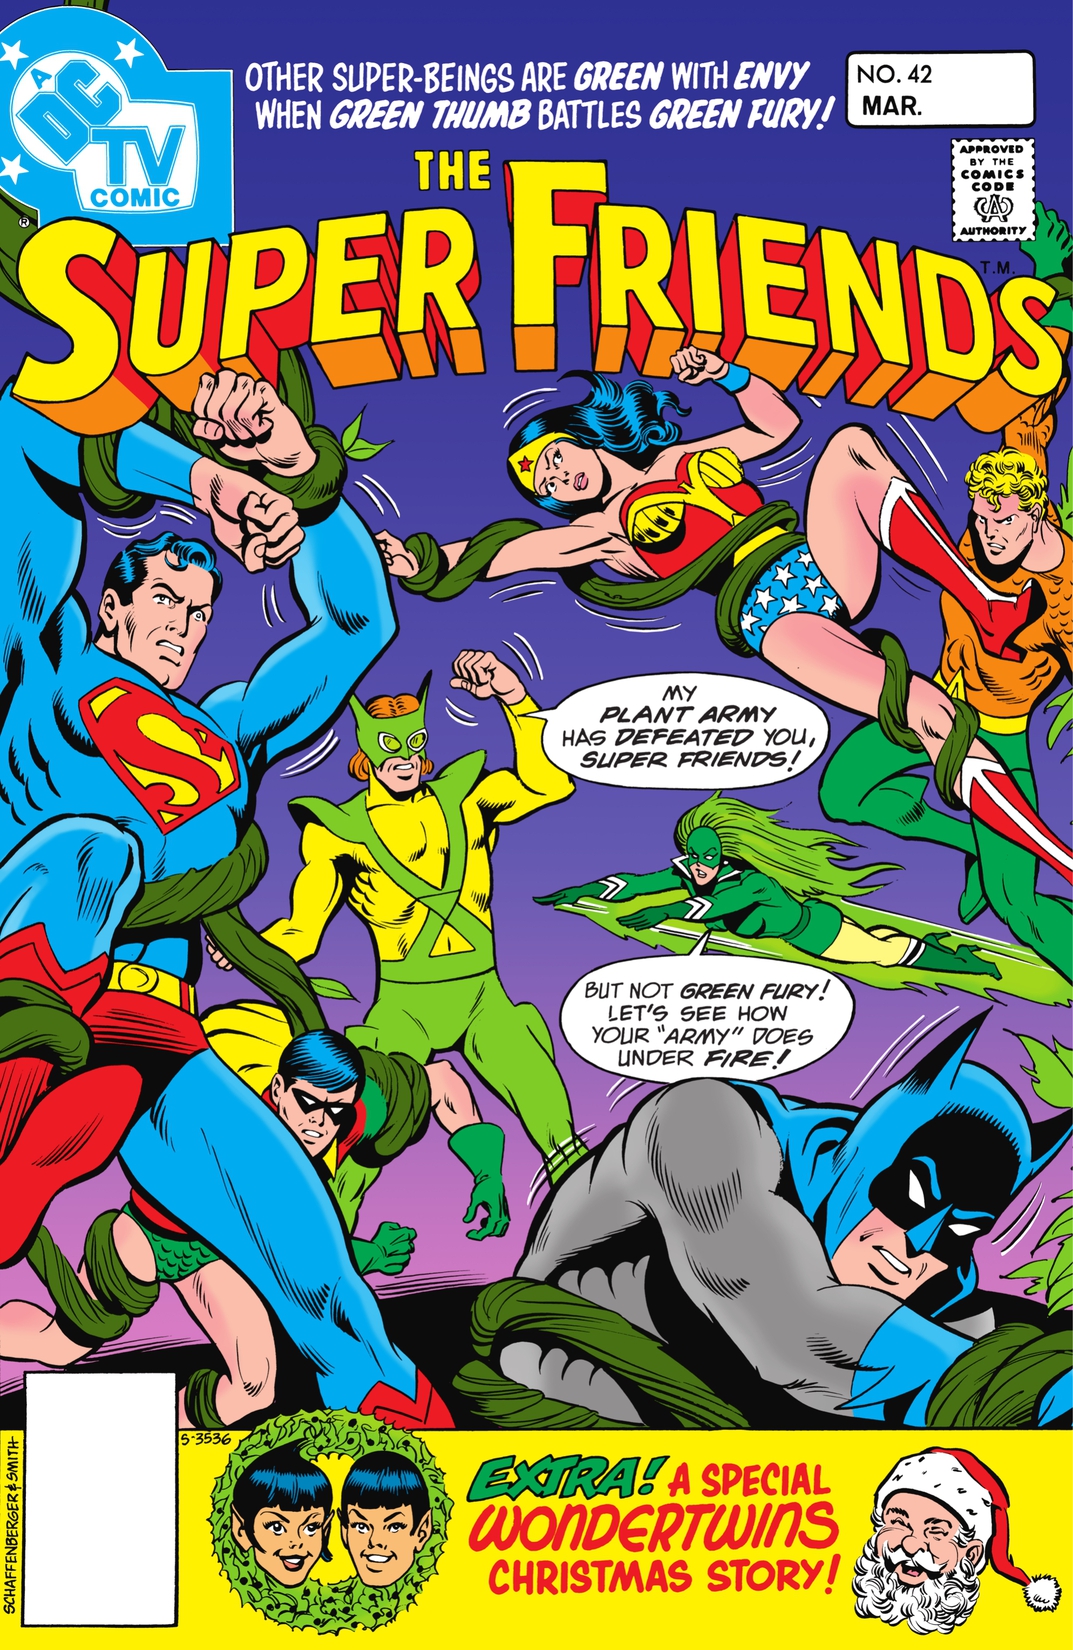 Super Friends (1976-1981) #42 preview images